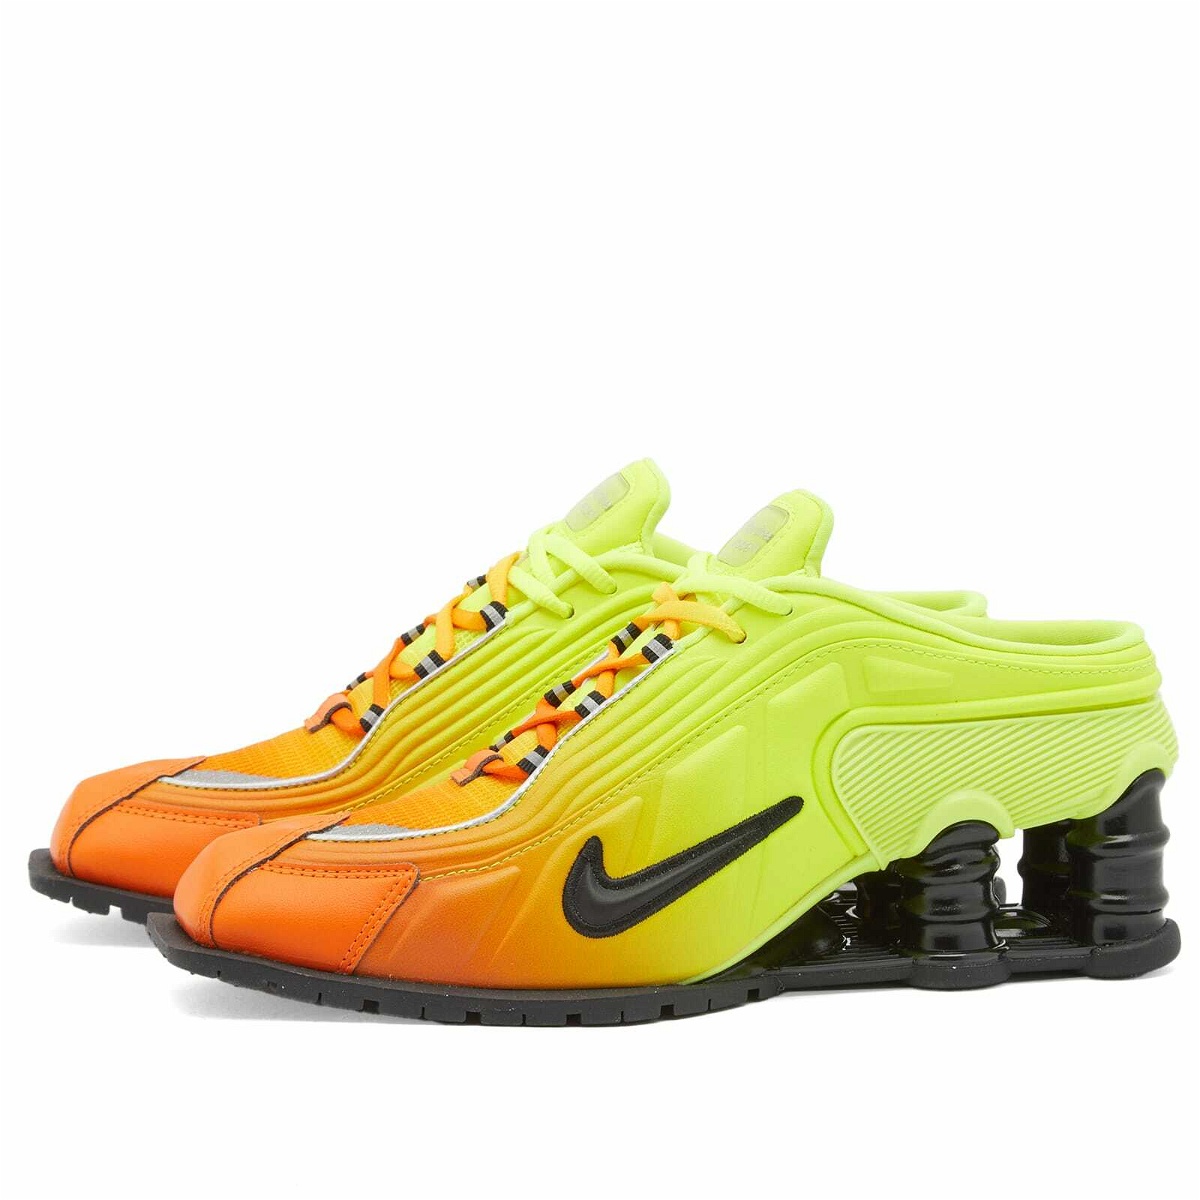 Photo: Nike x Martine Rose Shox MR4 Sneakers in Orange/Black/Silver